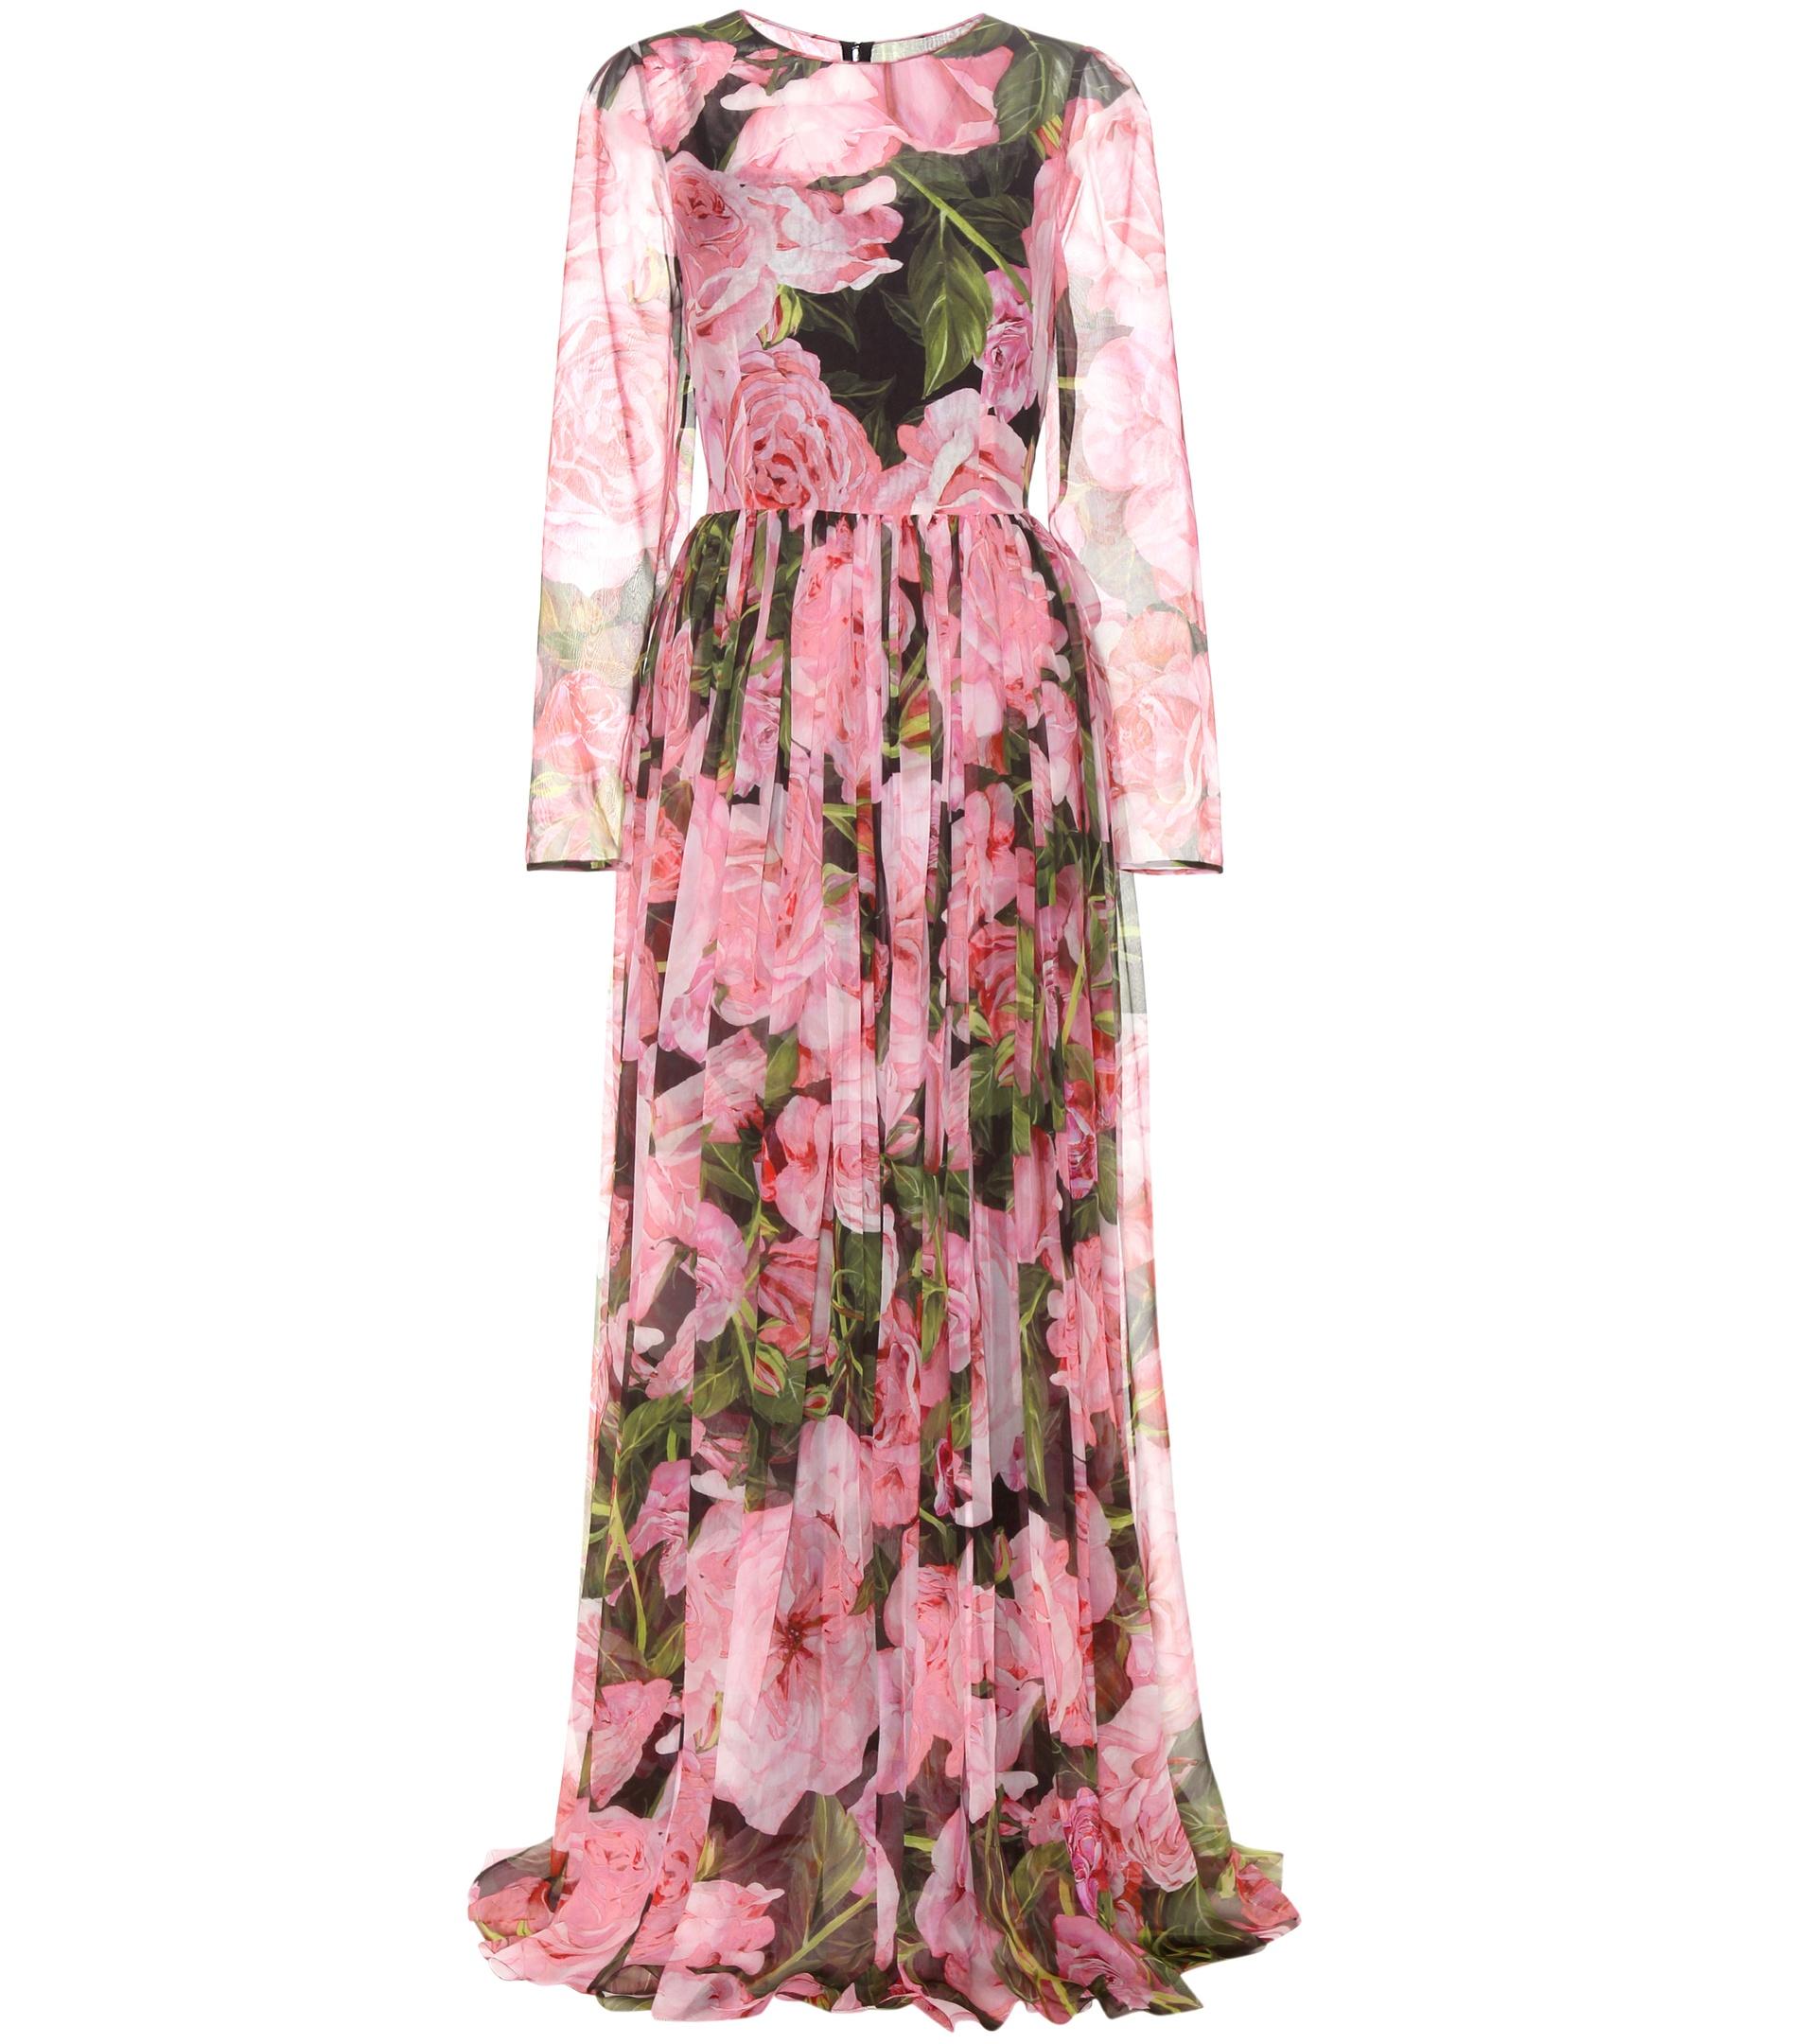 Lyst - Dolce & Gabbana Floral-printed Silk Dress in Pink